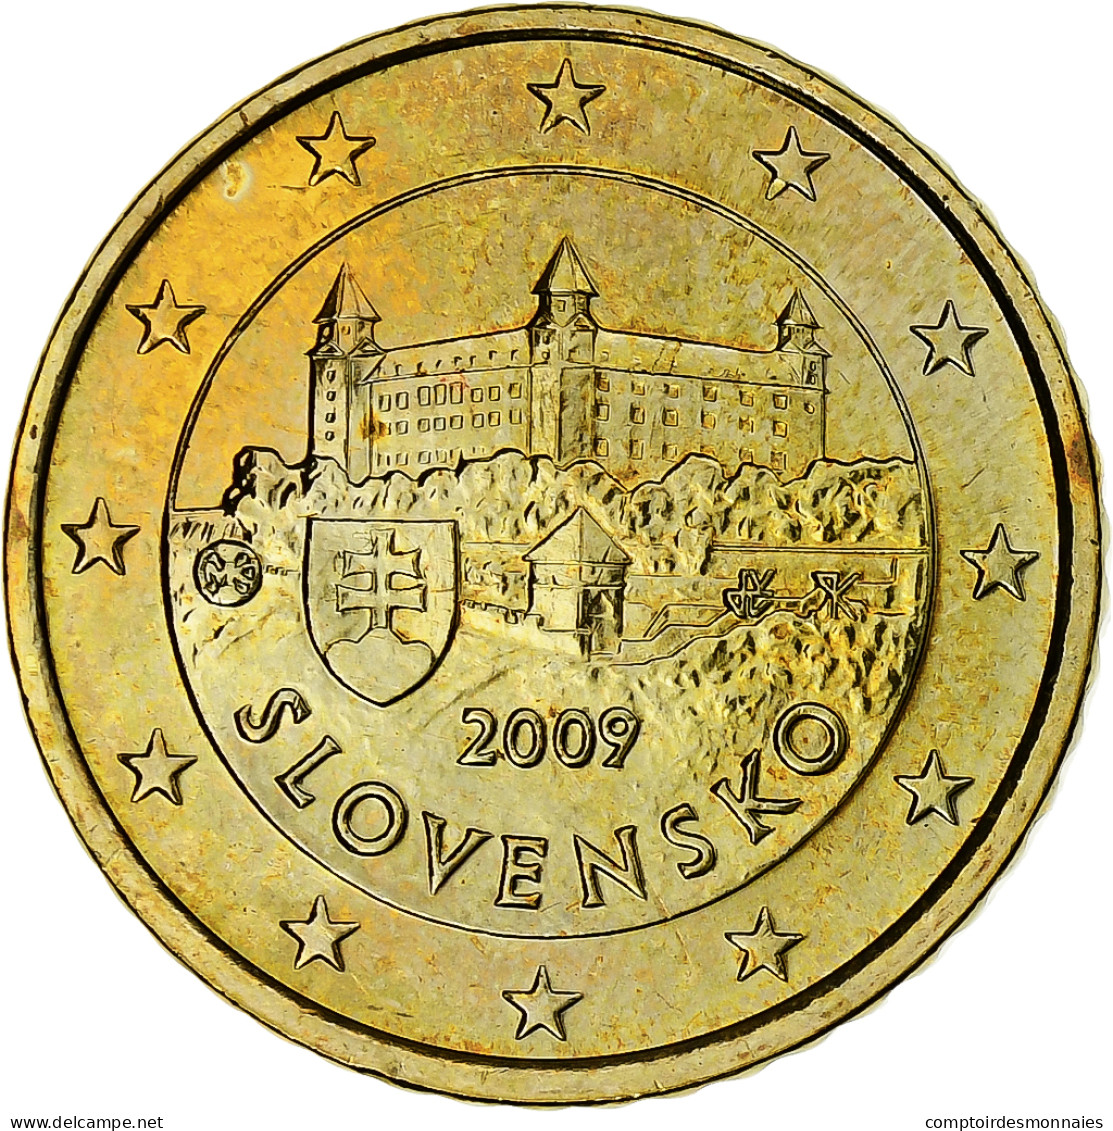 Slovaquie, 50 Euro Cent, 2009, Kremnica, SPL+, Or Nordique, KM:100 - Slowakije